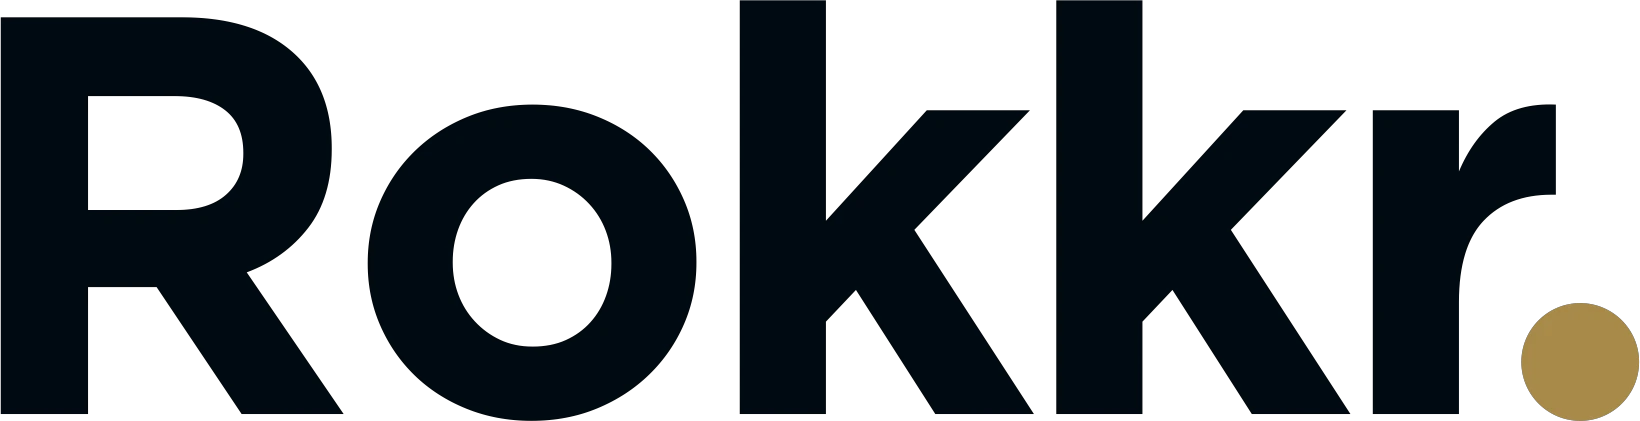 rokkr.net